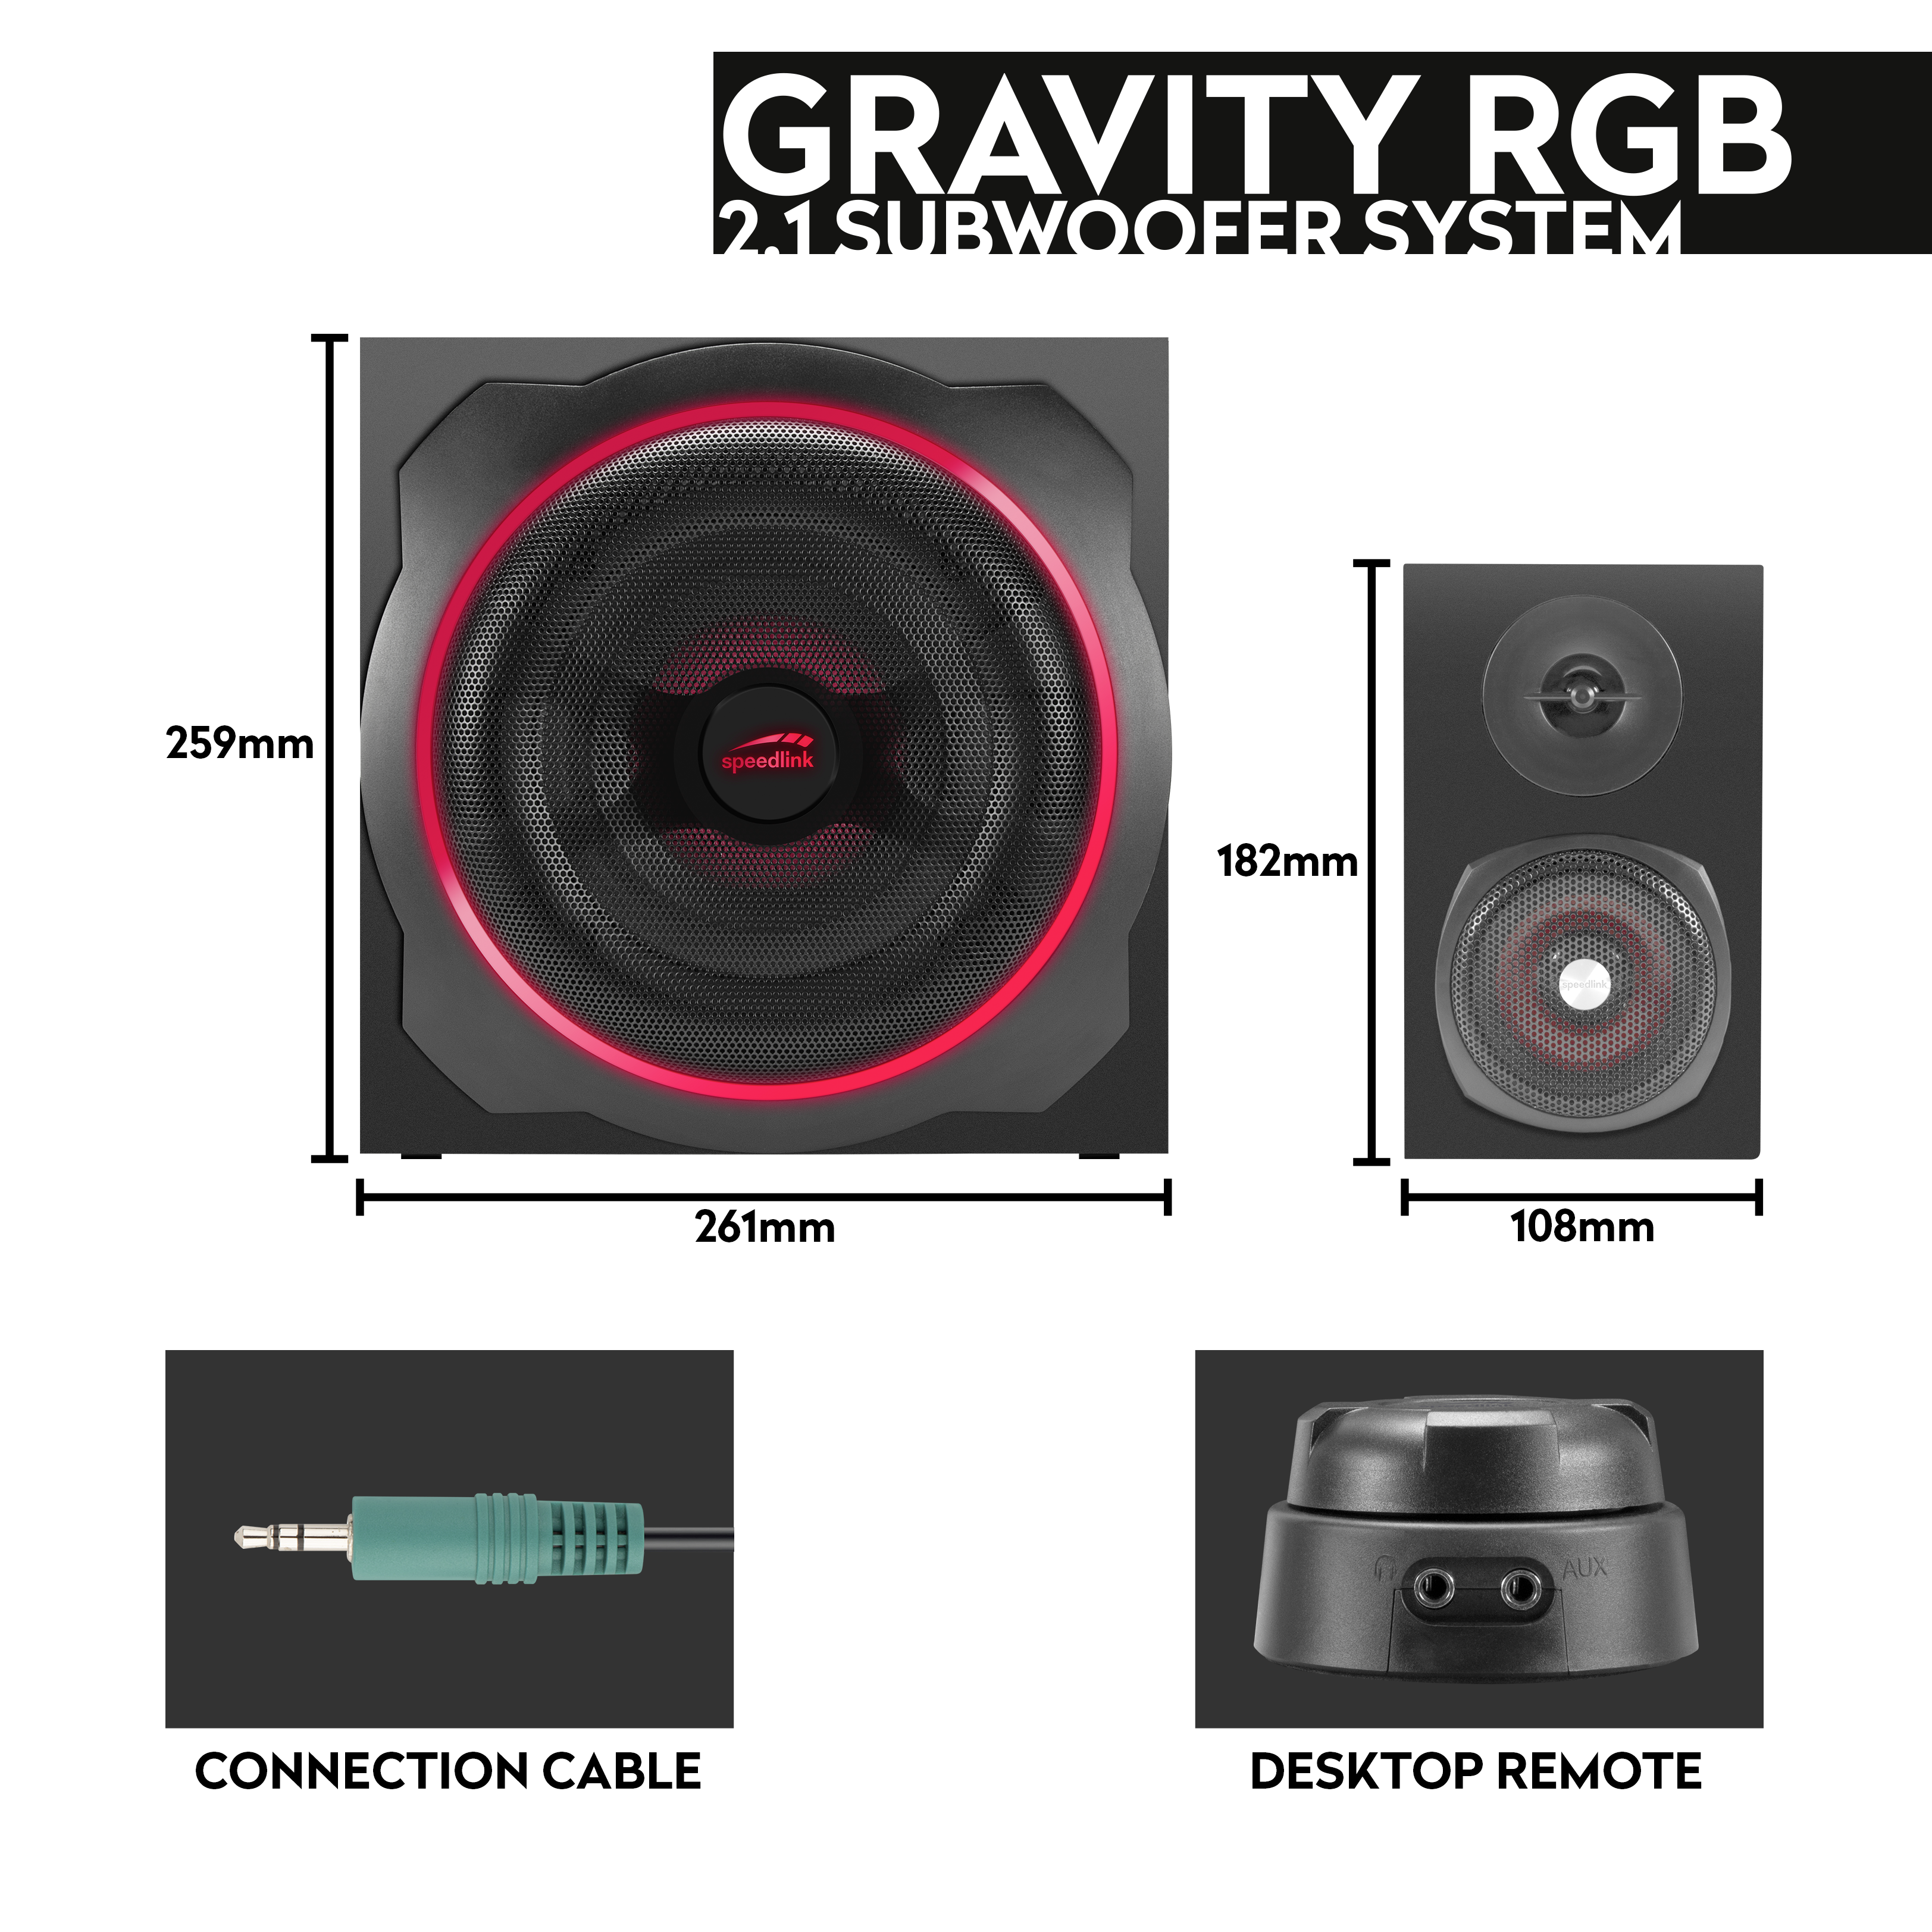 GRAVITY RGB 2.1 Subwoofer System, black